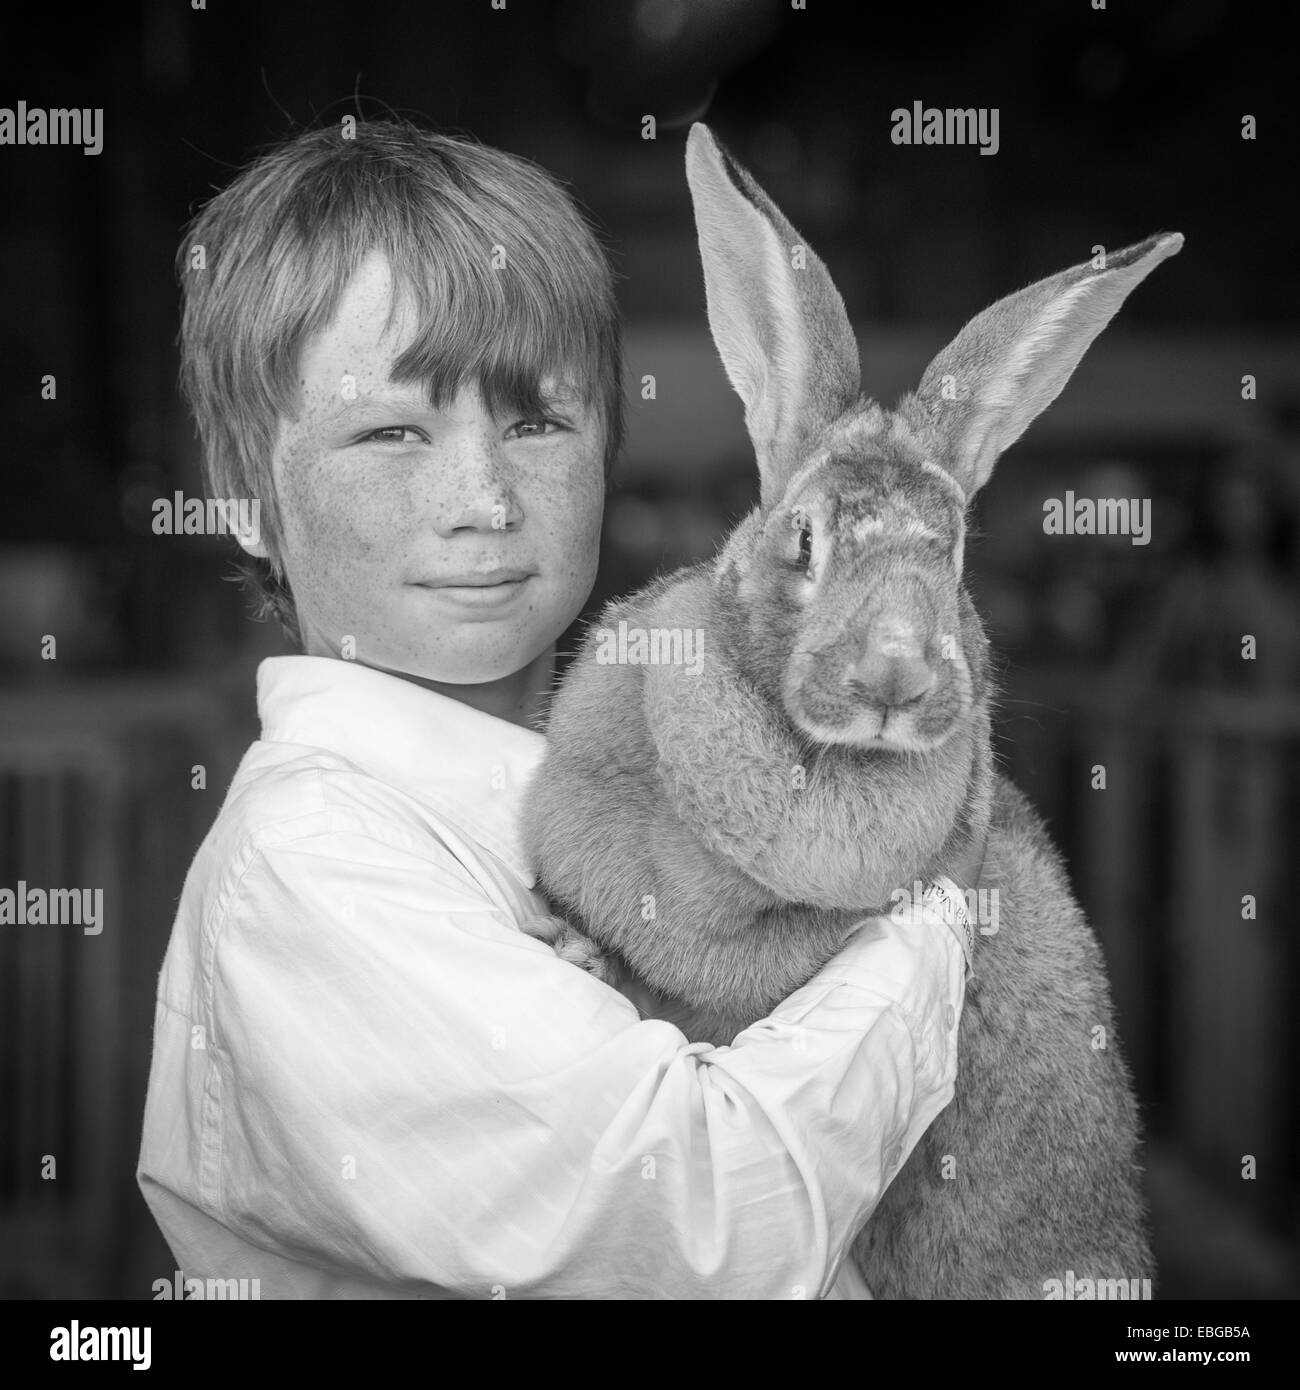 https://c8.alamy.com/comp/EBGB5A/boy-with-rabbit-flemish-giant-at-state-fair-in-alaska-EBGB5A.jpg